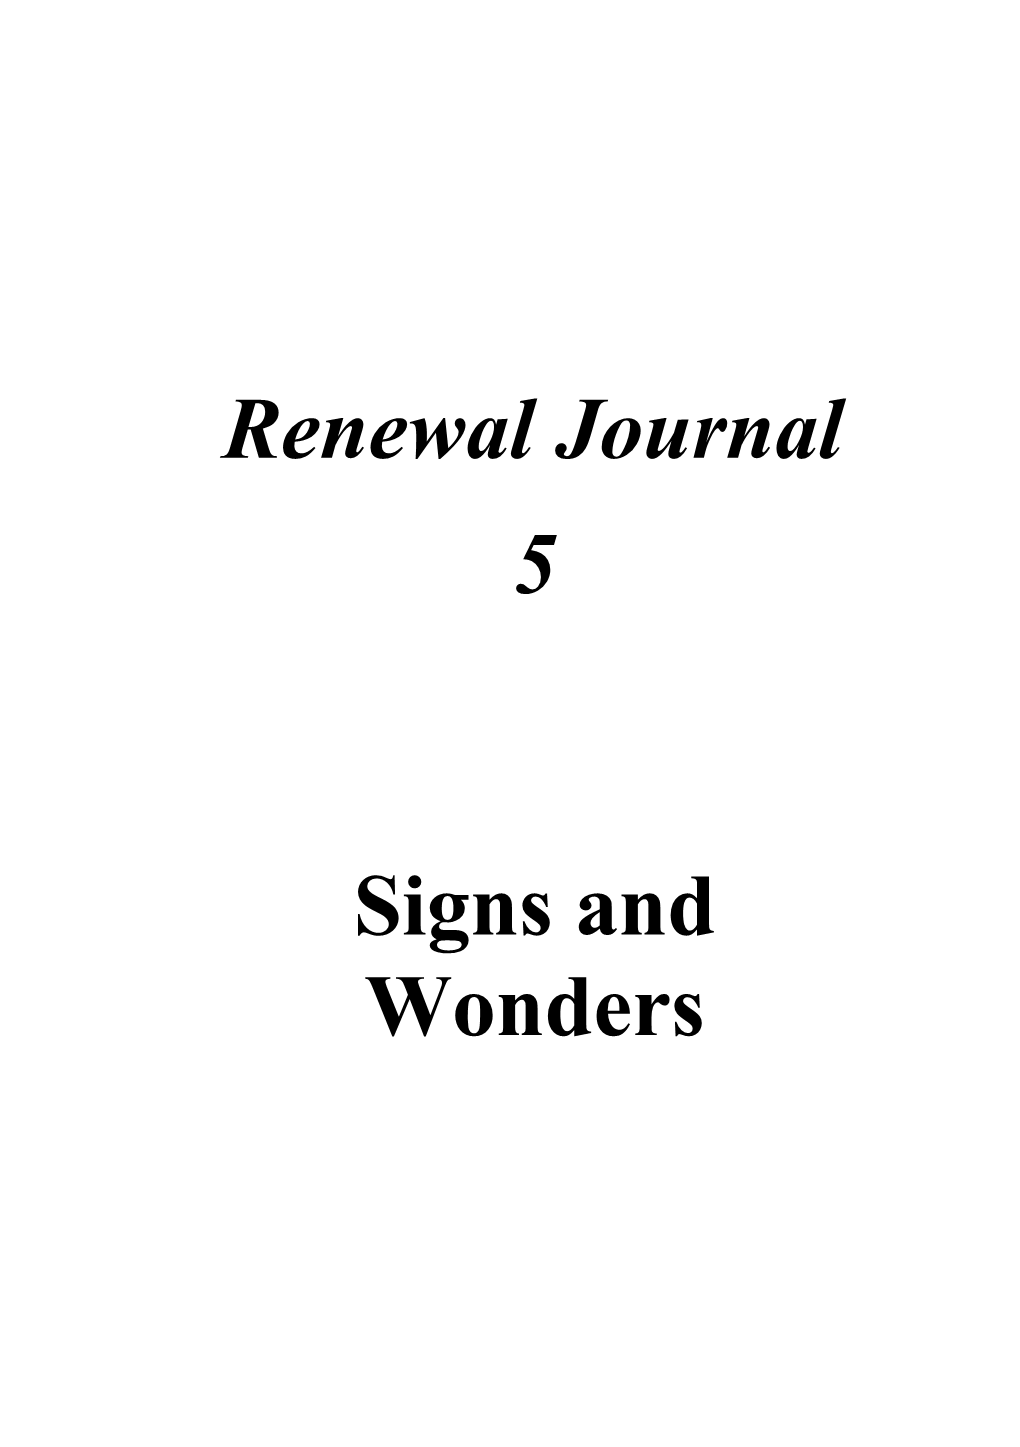 Renewal Journal 5 Signs and Wonders